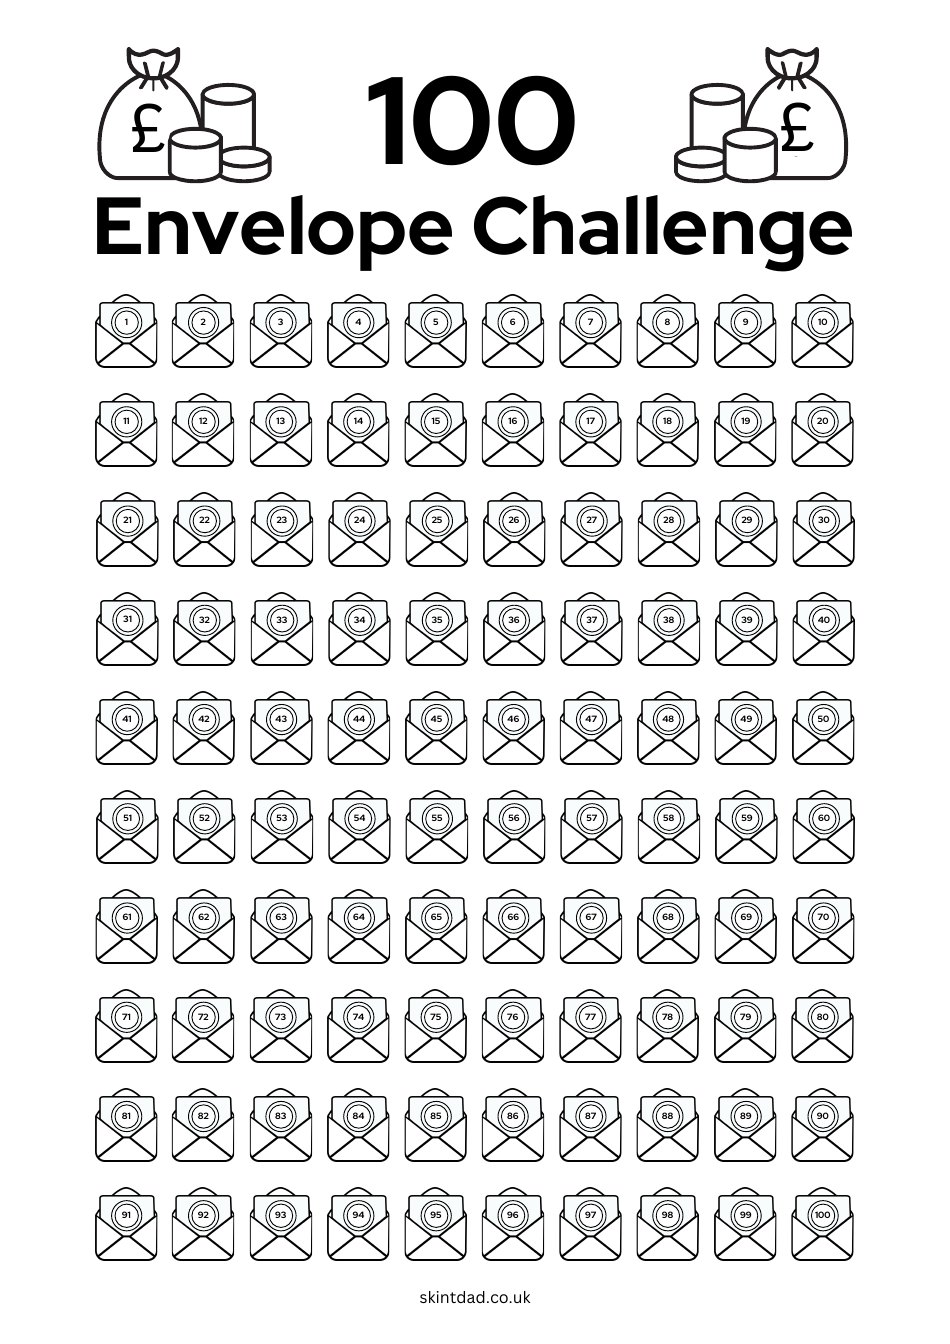 Template for 100 Envelope Challenge